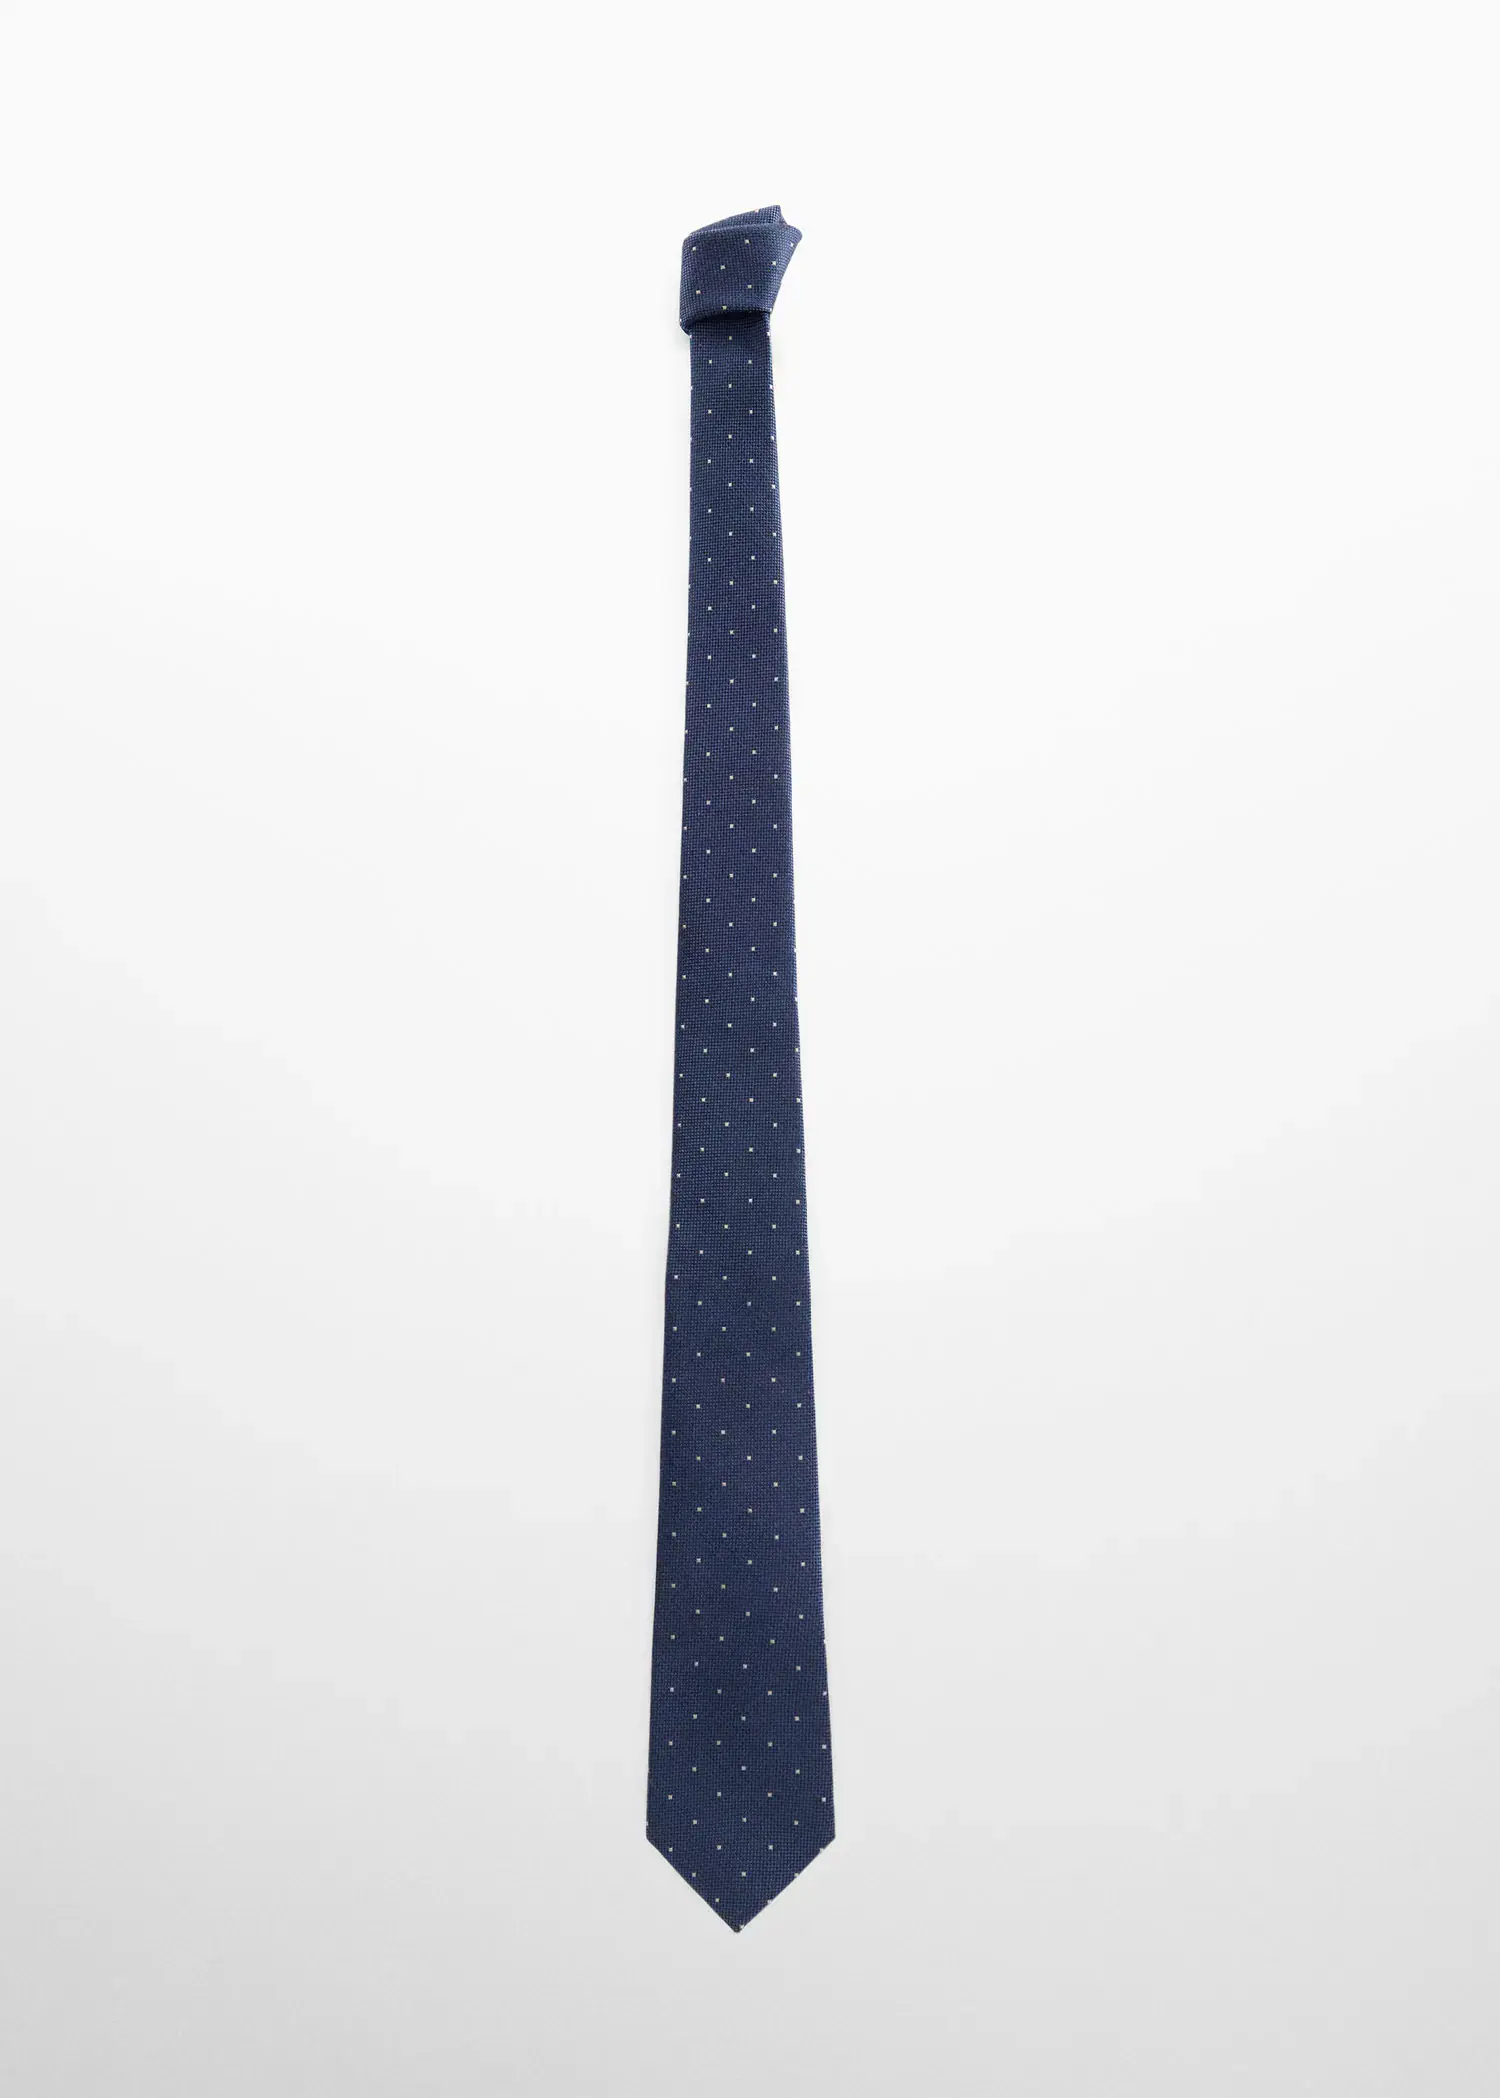 Mango Mikro puantiyeli biçimli kravat. 1